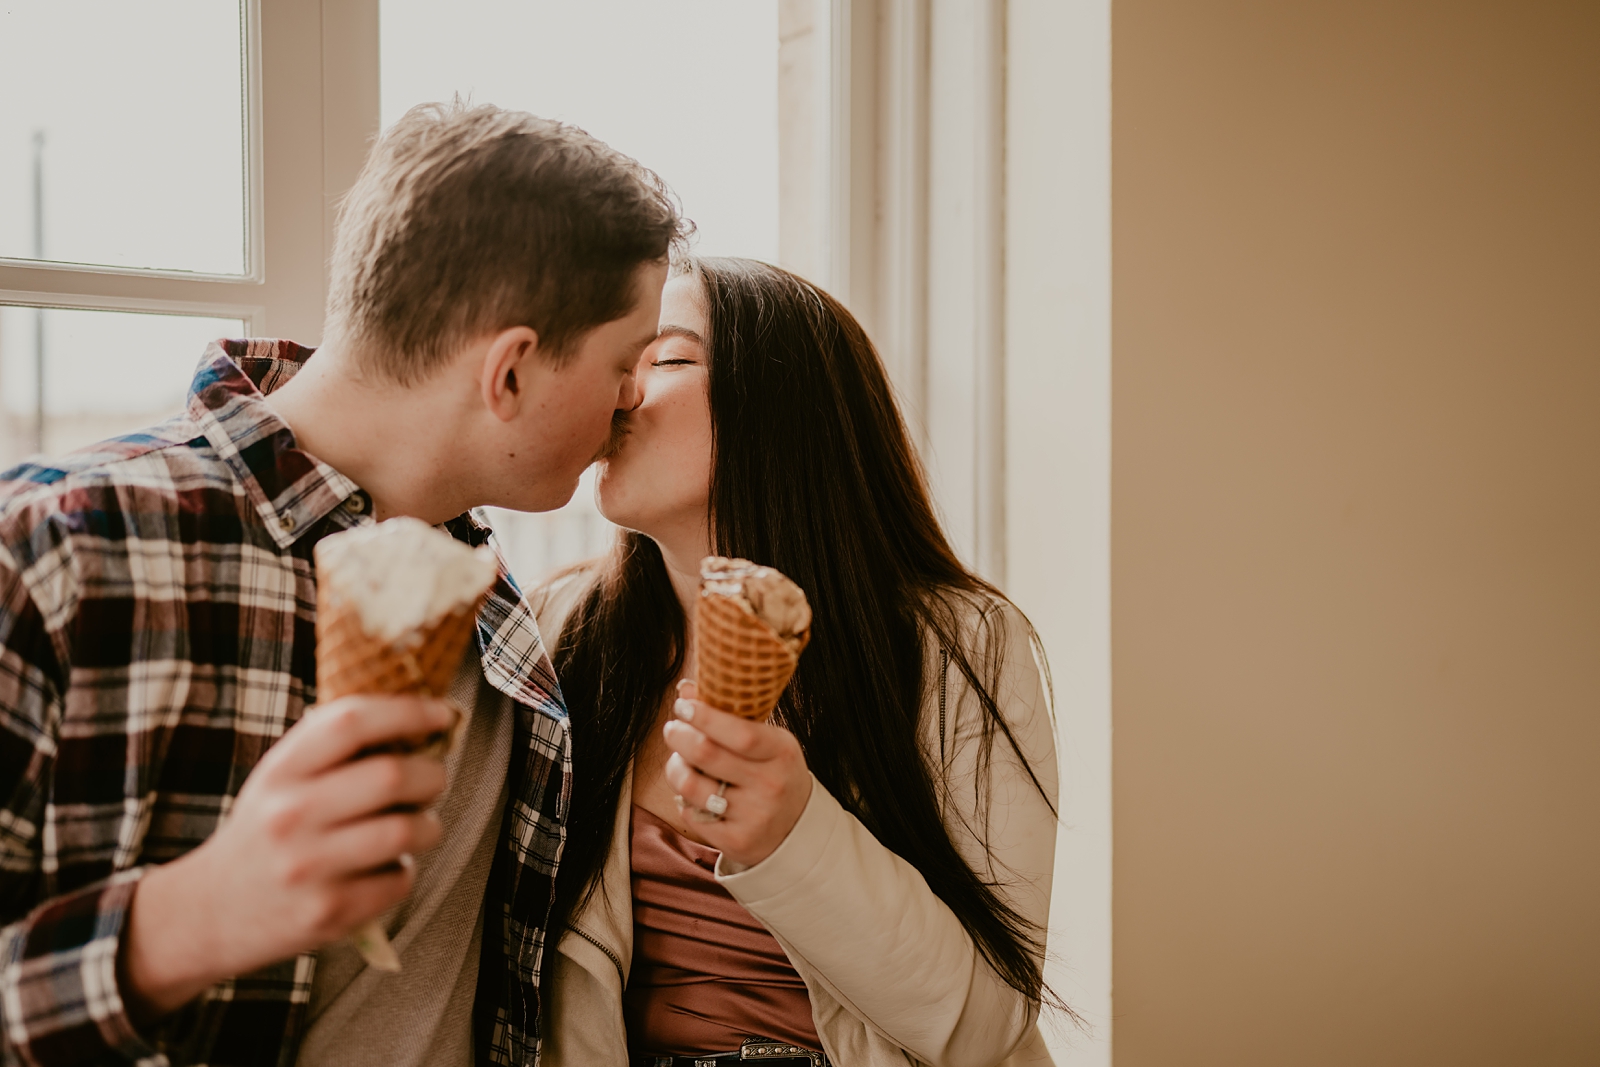 Engagement photos with ice cream